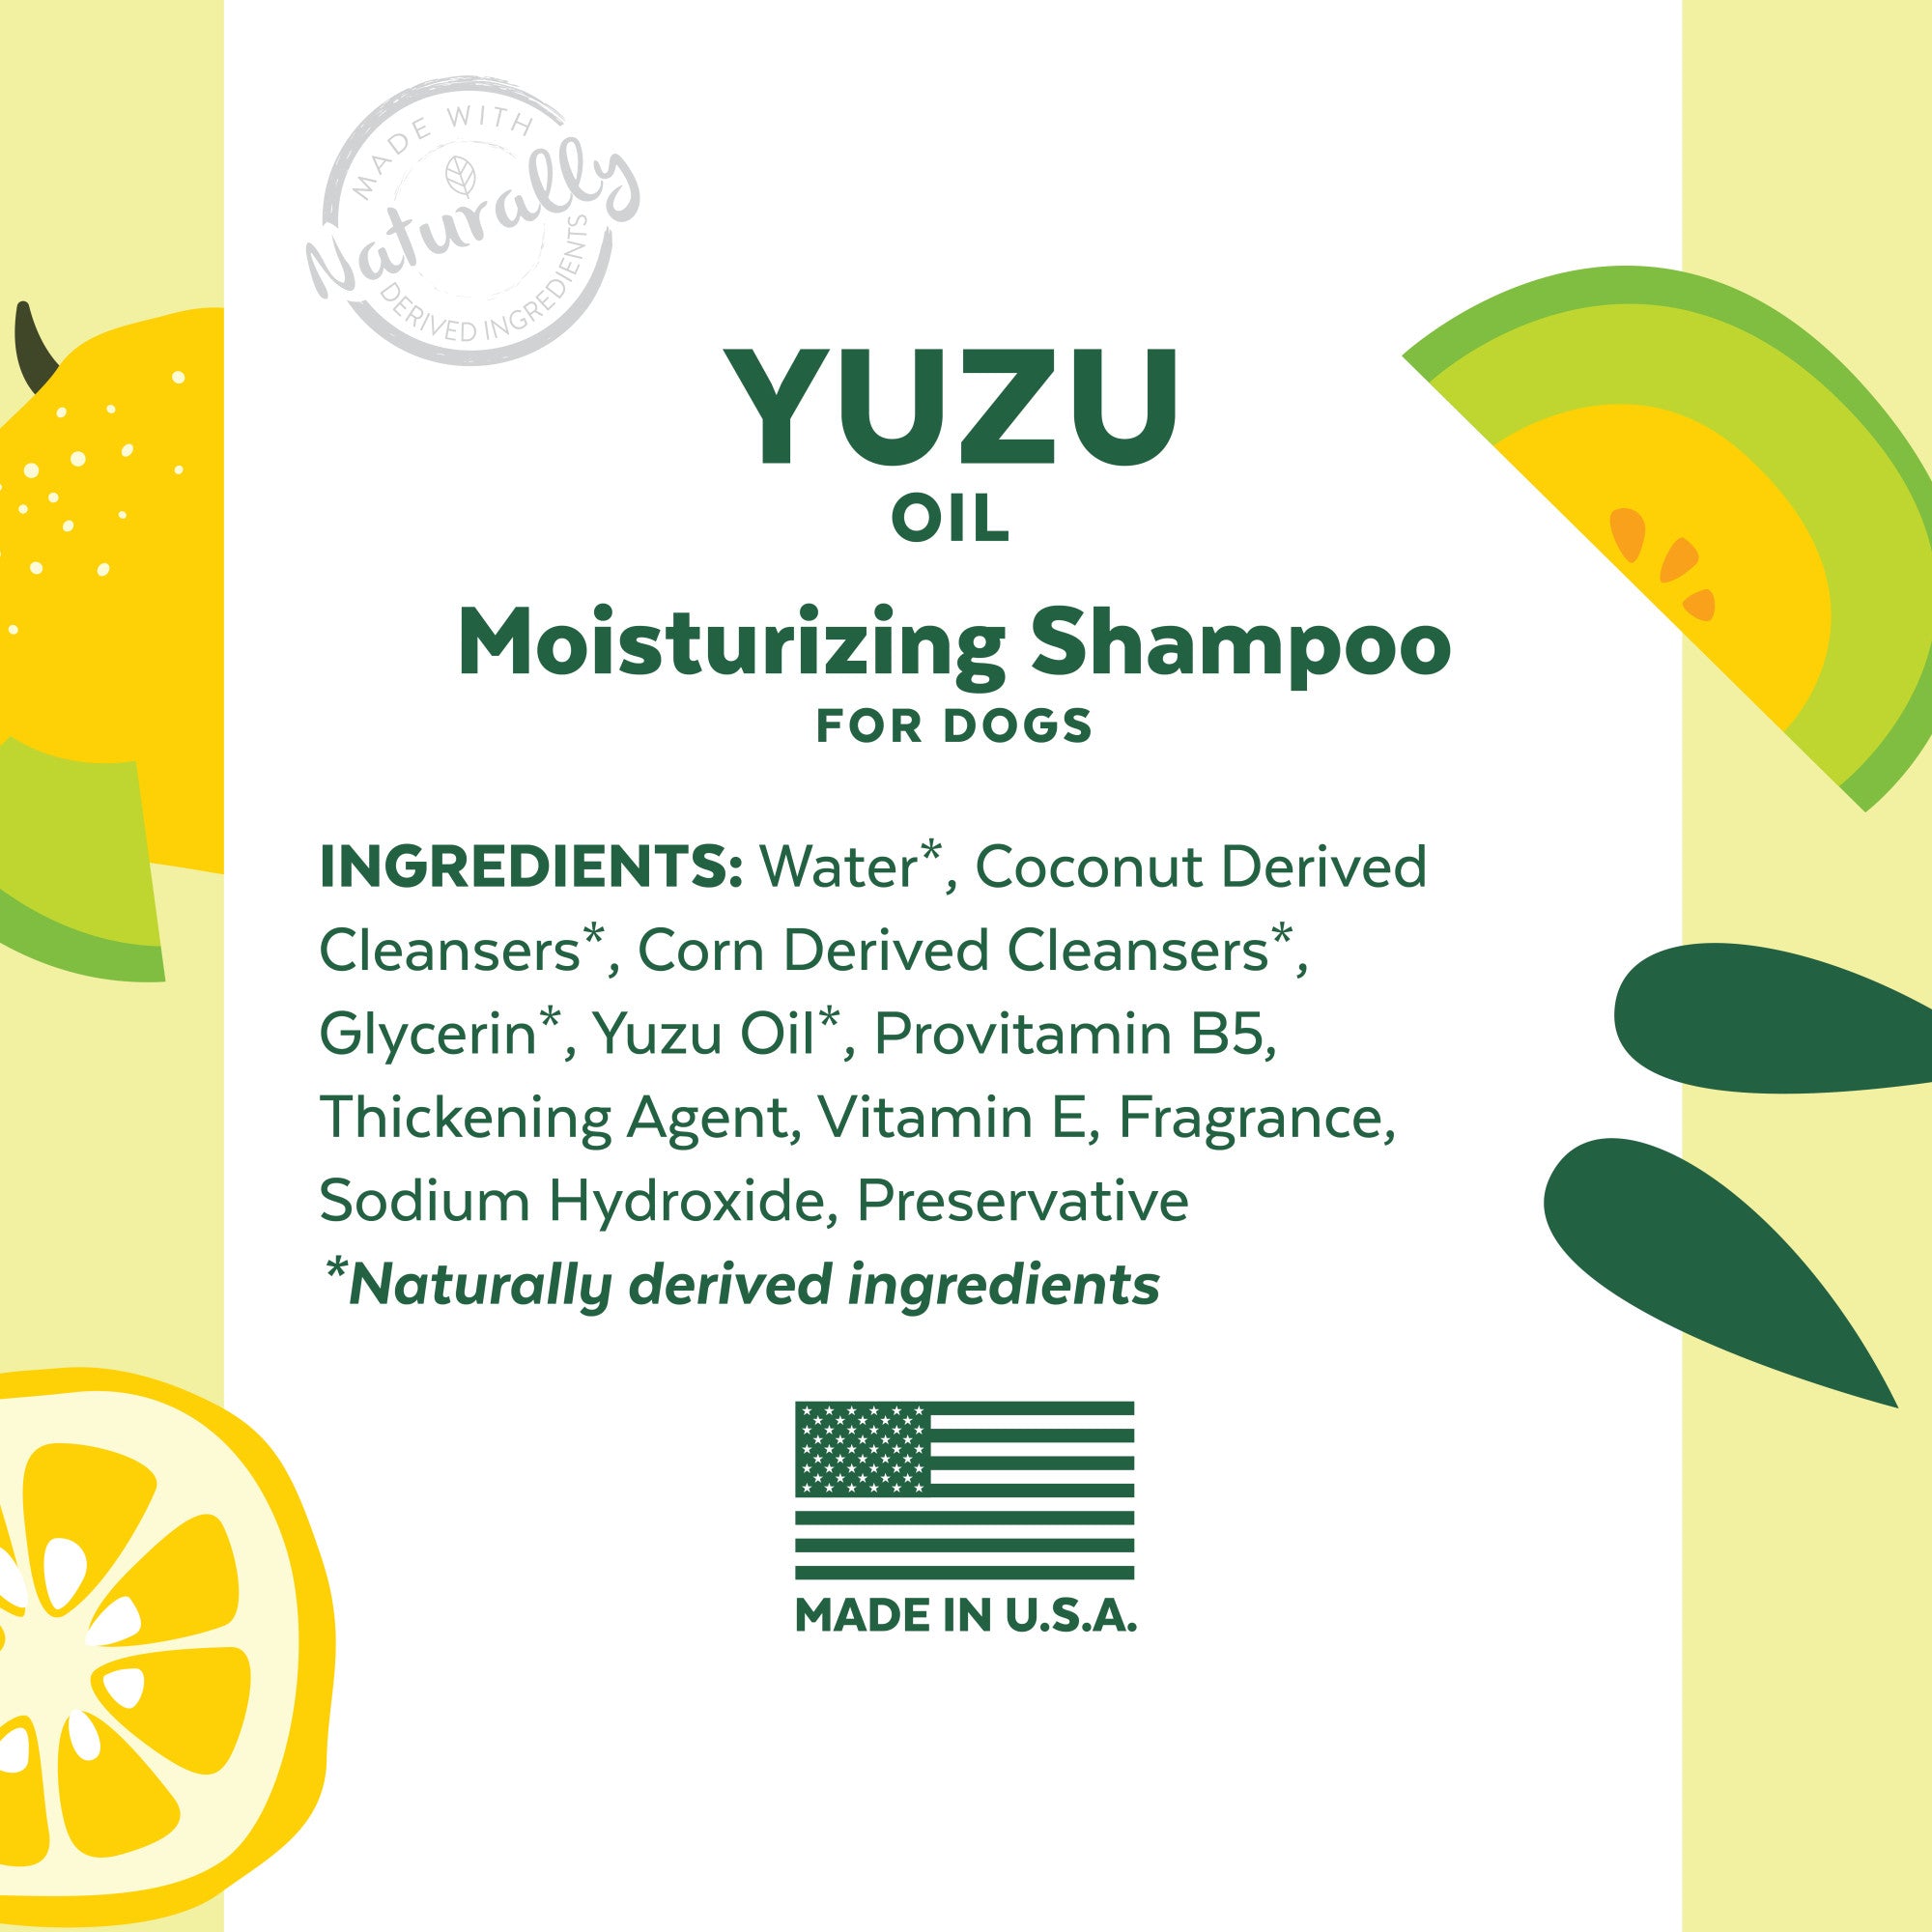 TropiClean | Yuzu Oil Moisturizing Shampoo For Dogs Near Me | ARMOR THE POOCH